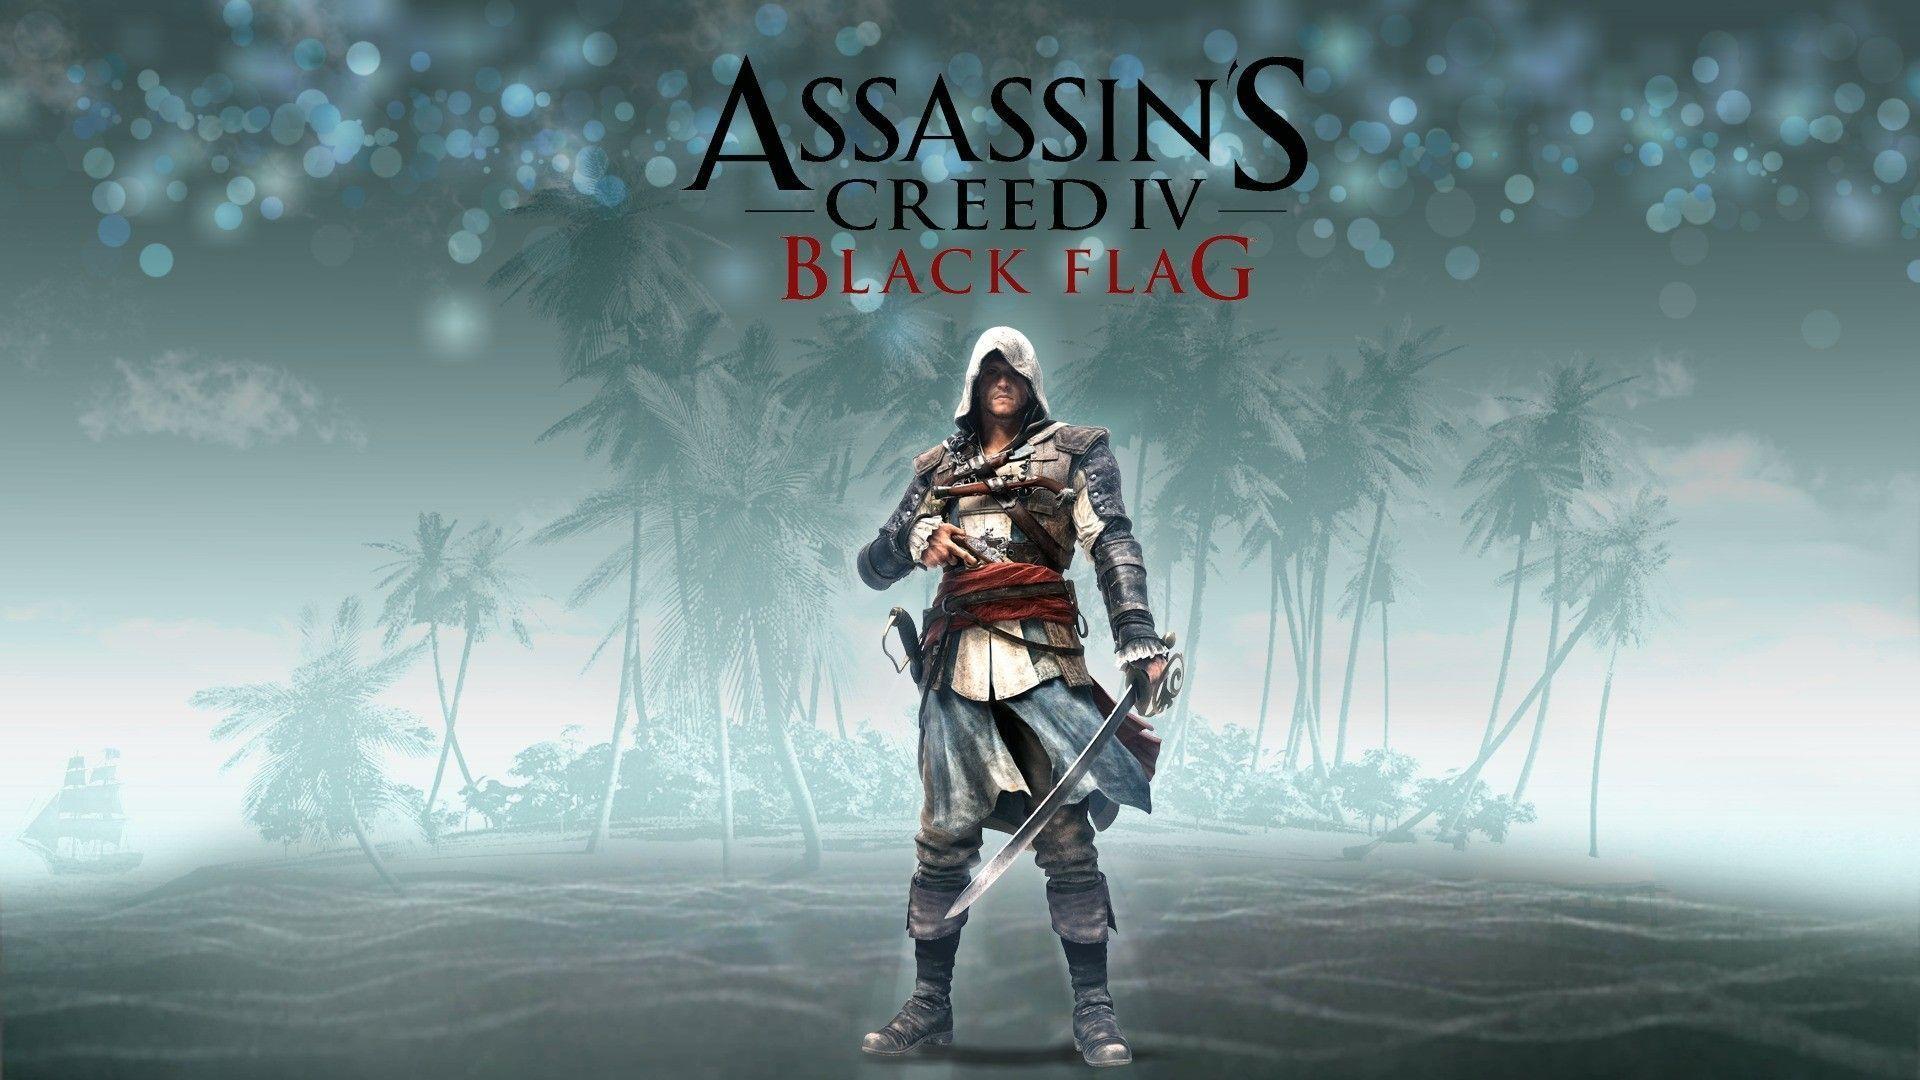 Assassin&Creed IV: Black Flag Wallpapers [1920x1080] : assassinscreed